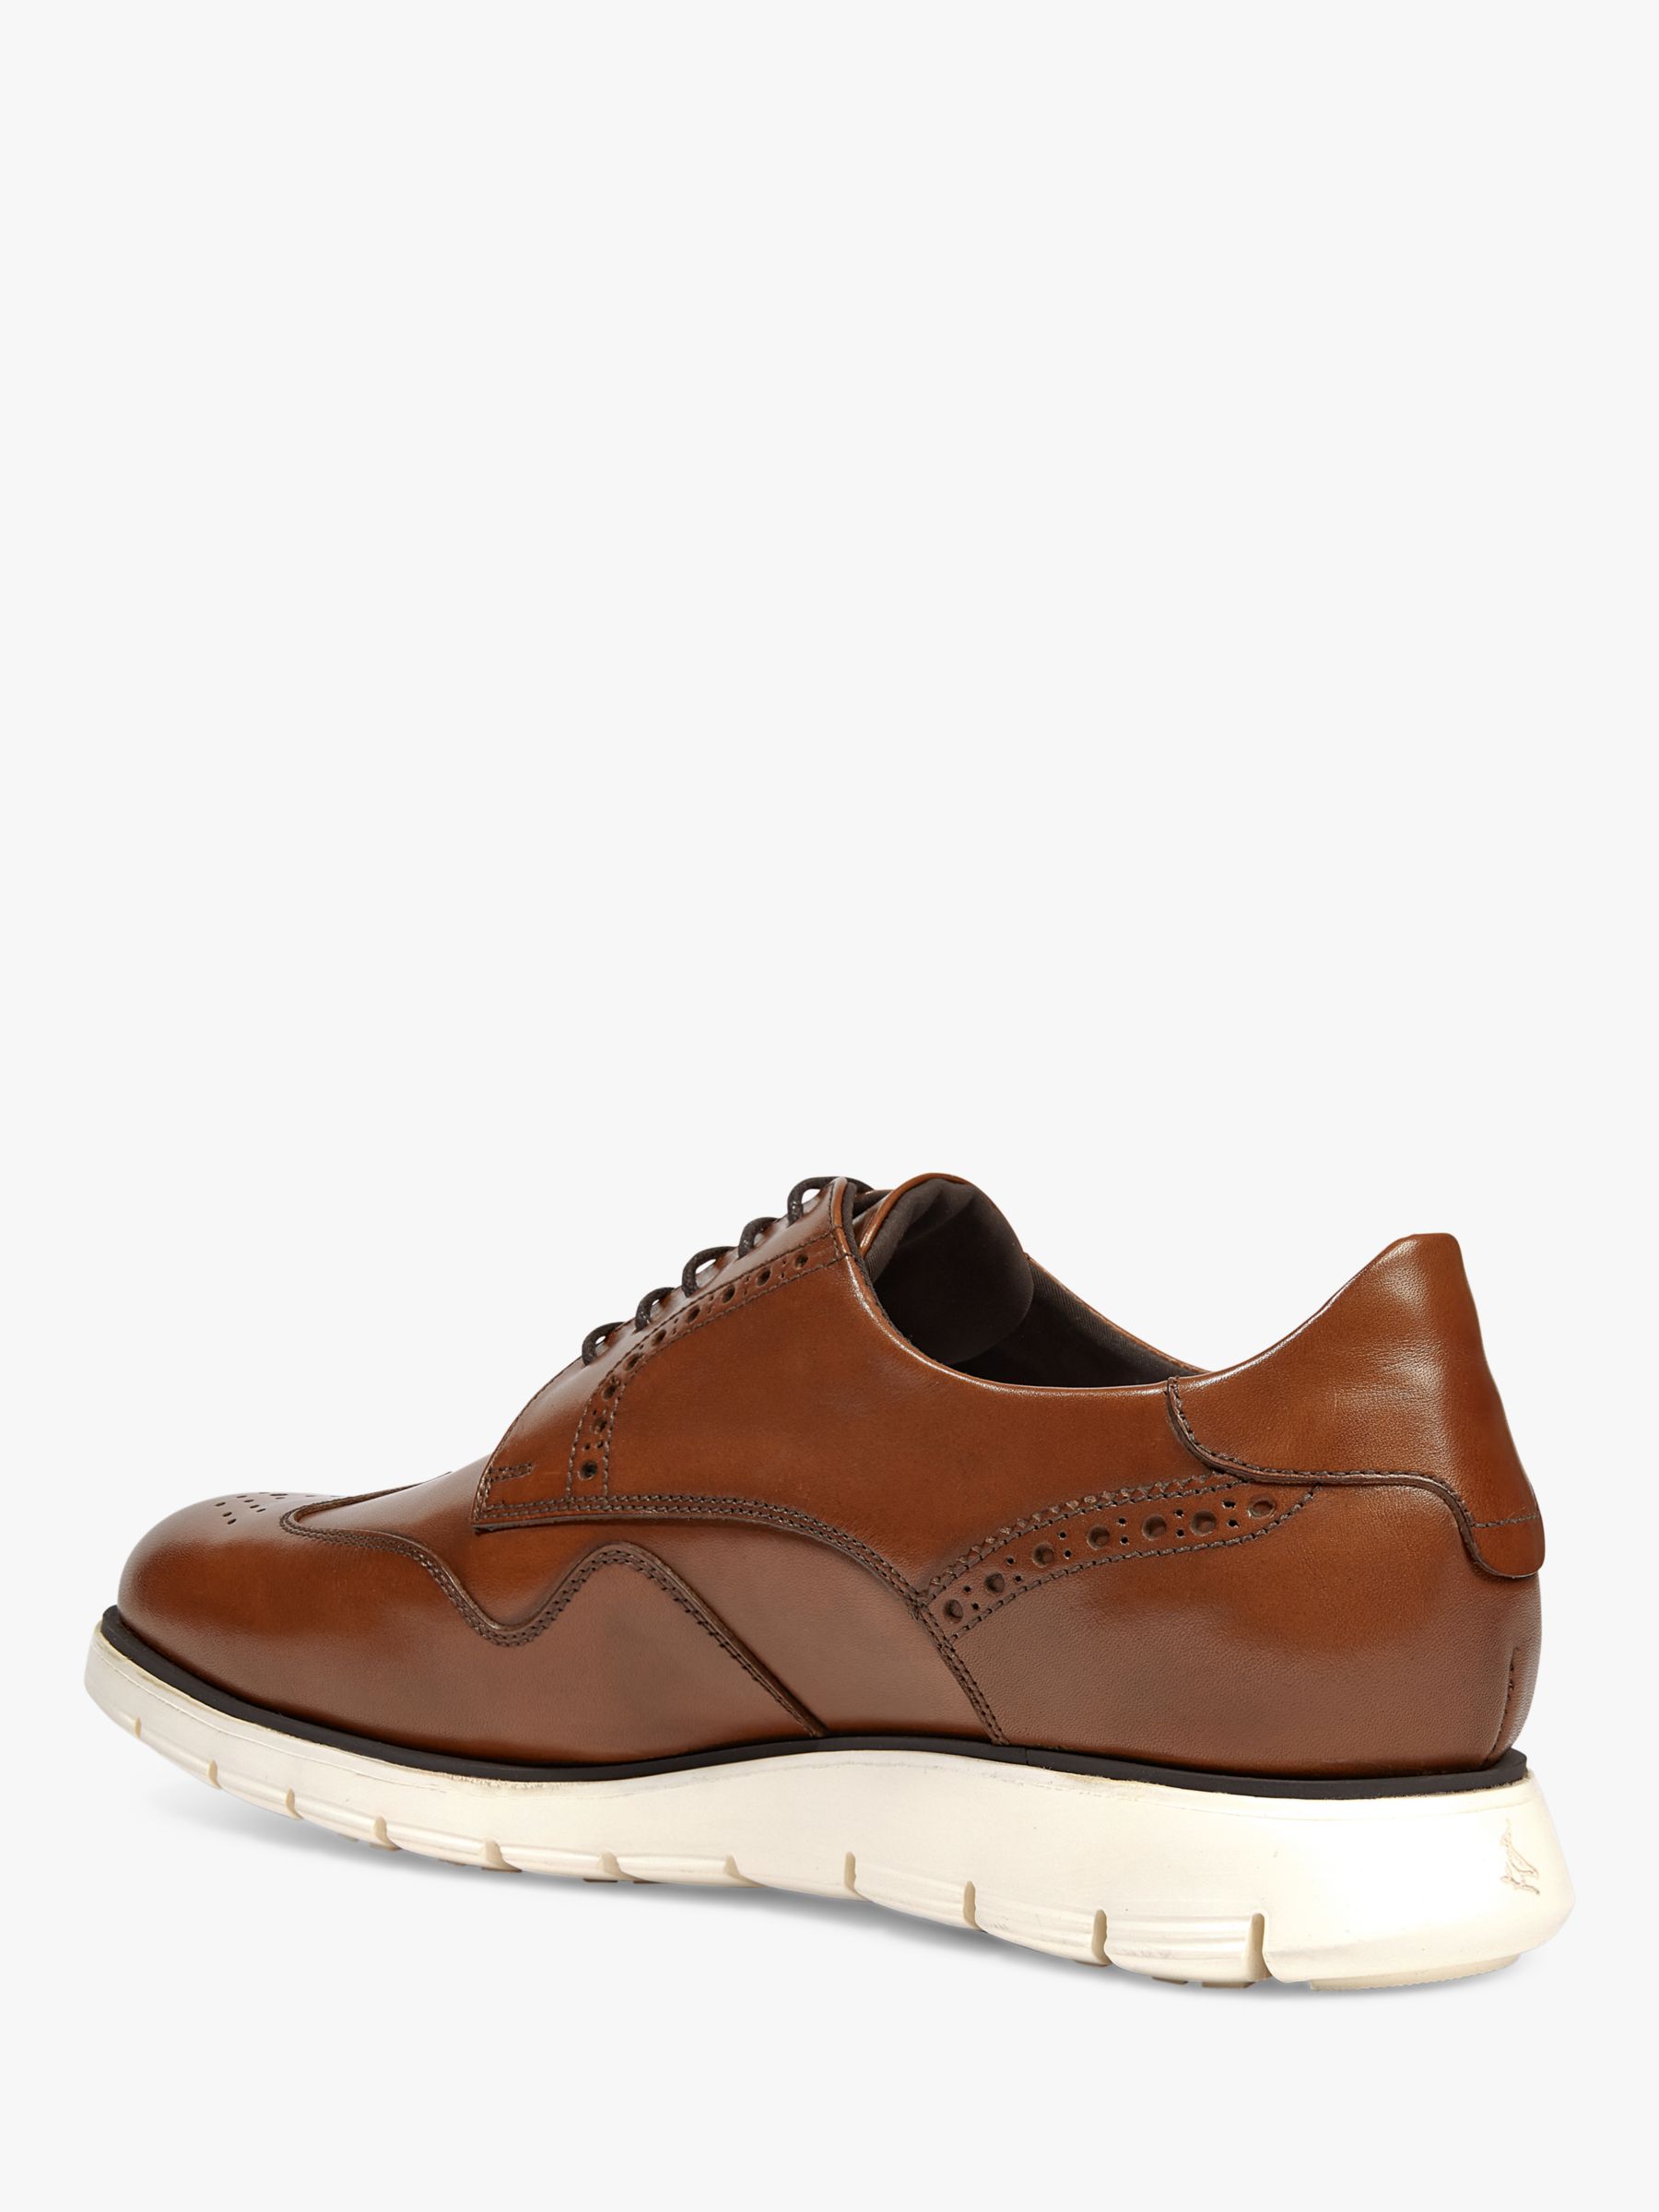 Charles Tyrwhitt Leather Hybrid Formal Trainer Shoes, Chestnut Brown at ...